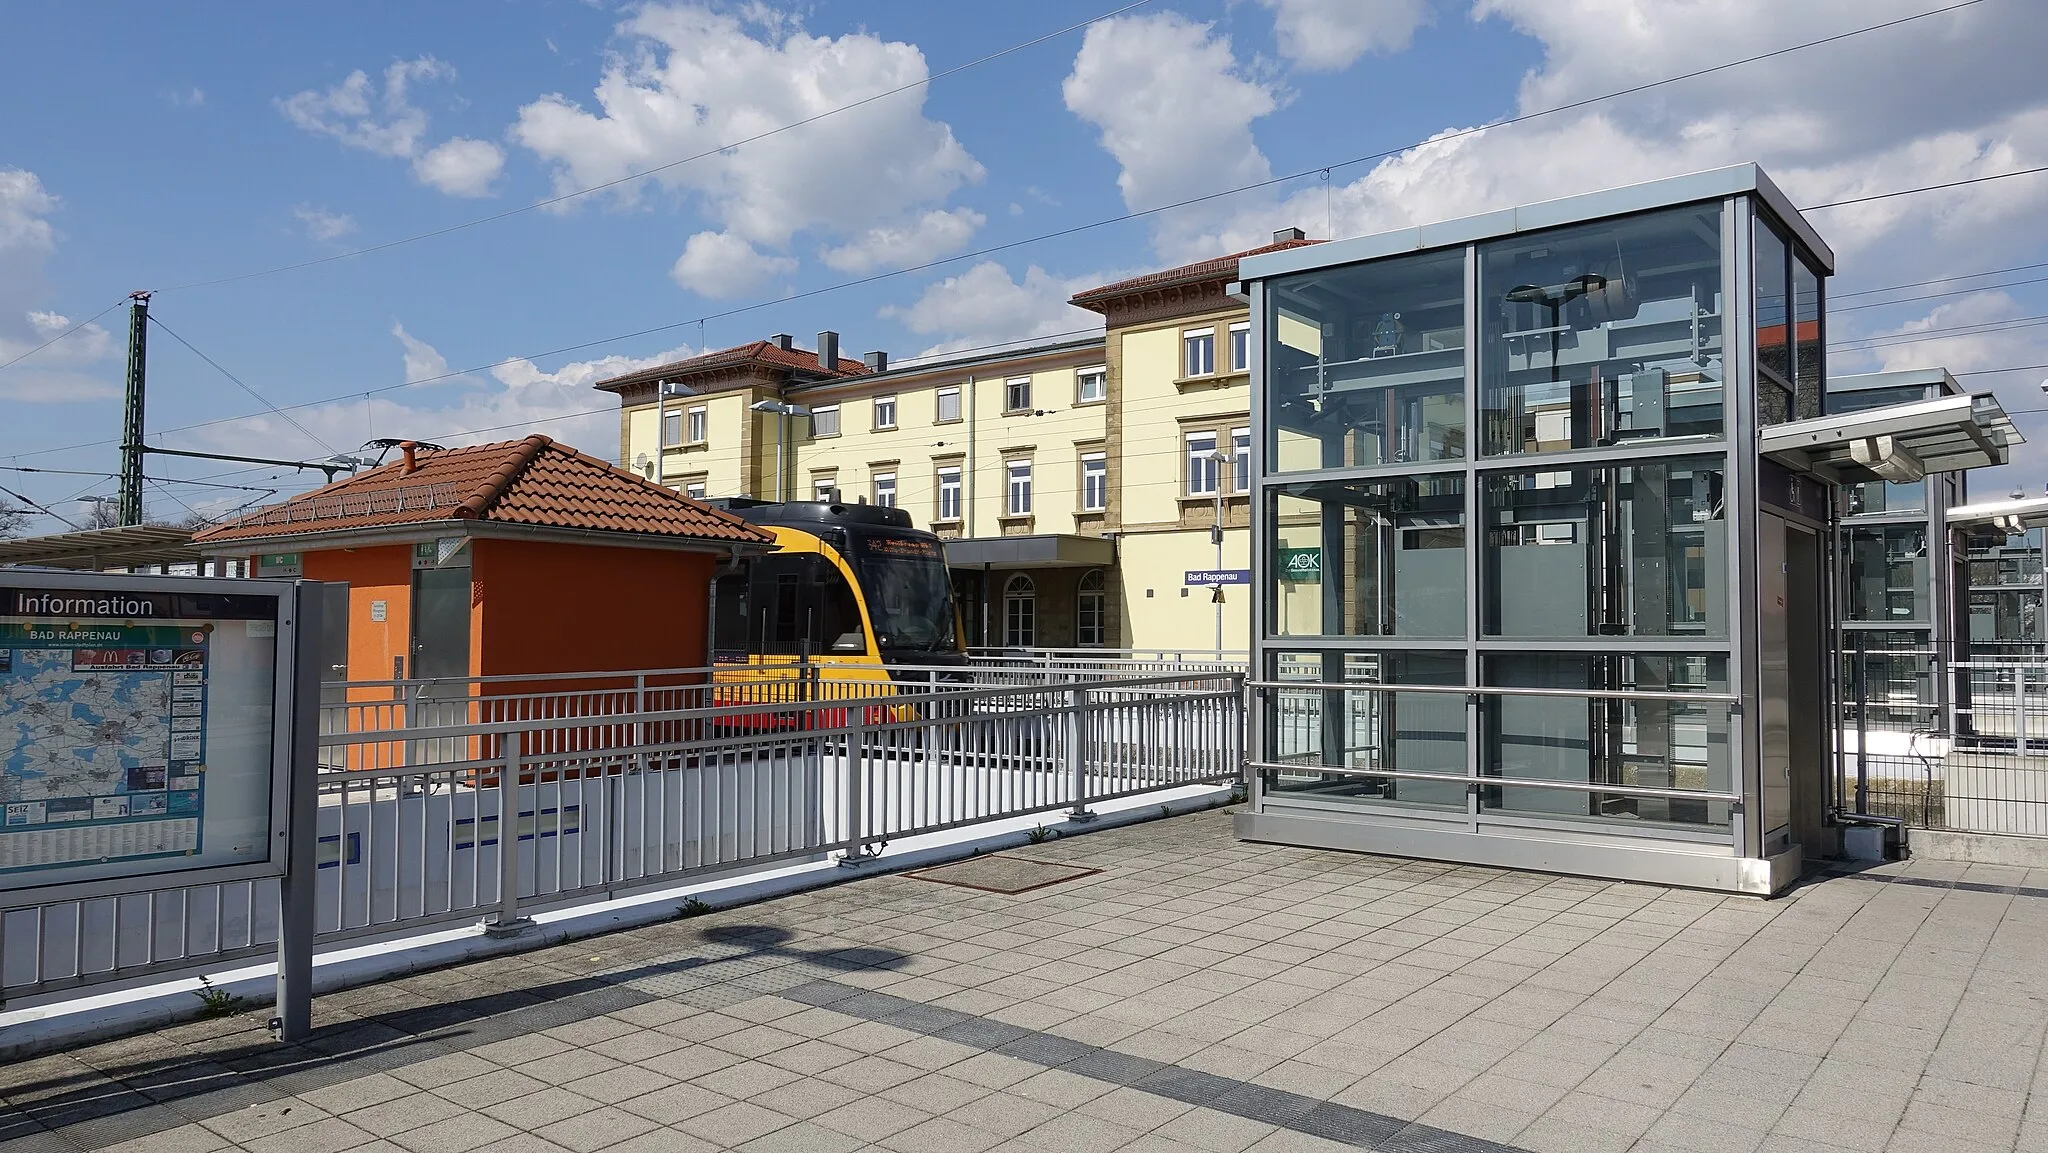 Photo showing: Bahnhof Bad Rappenau